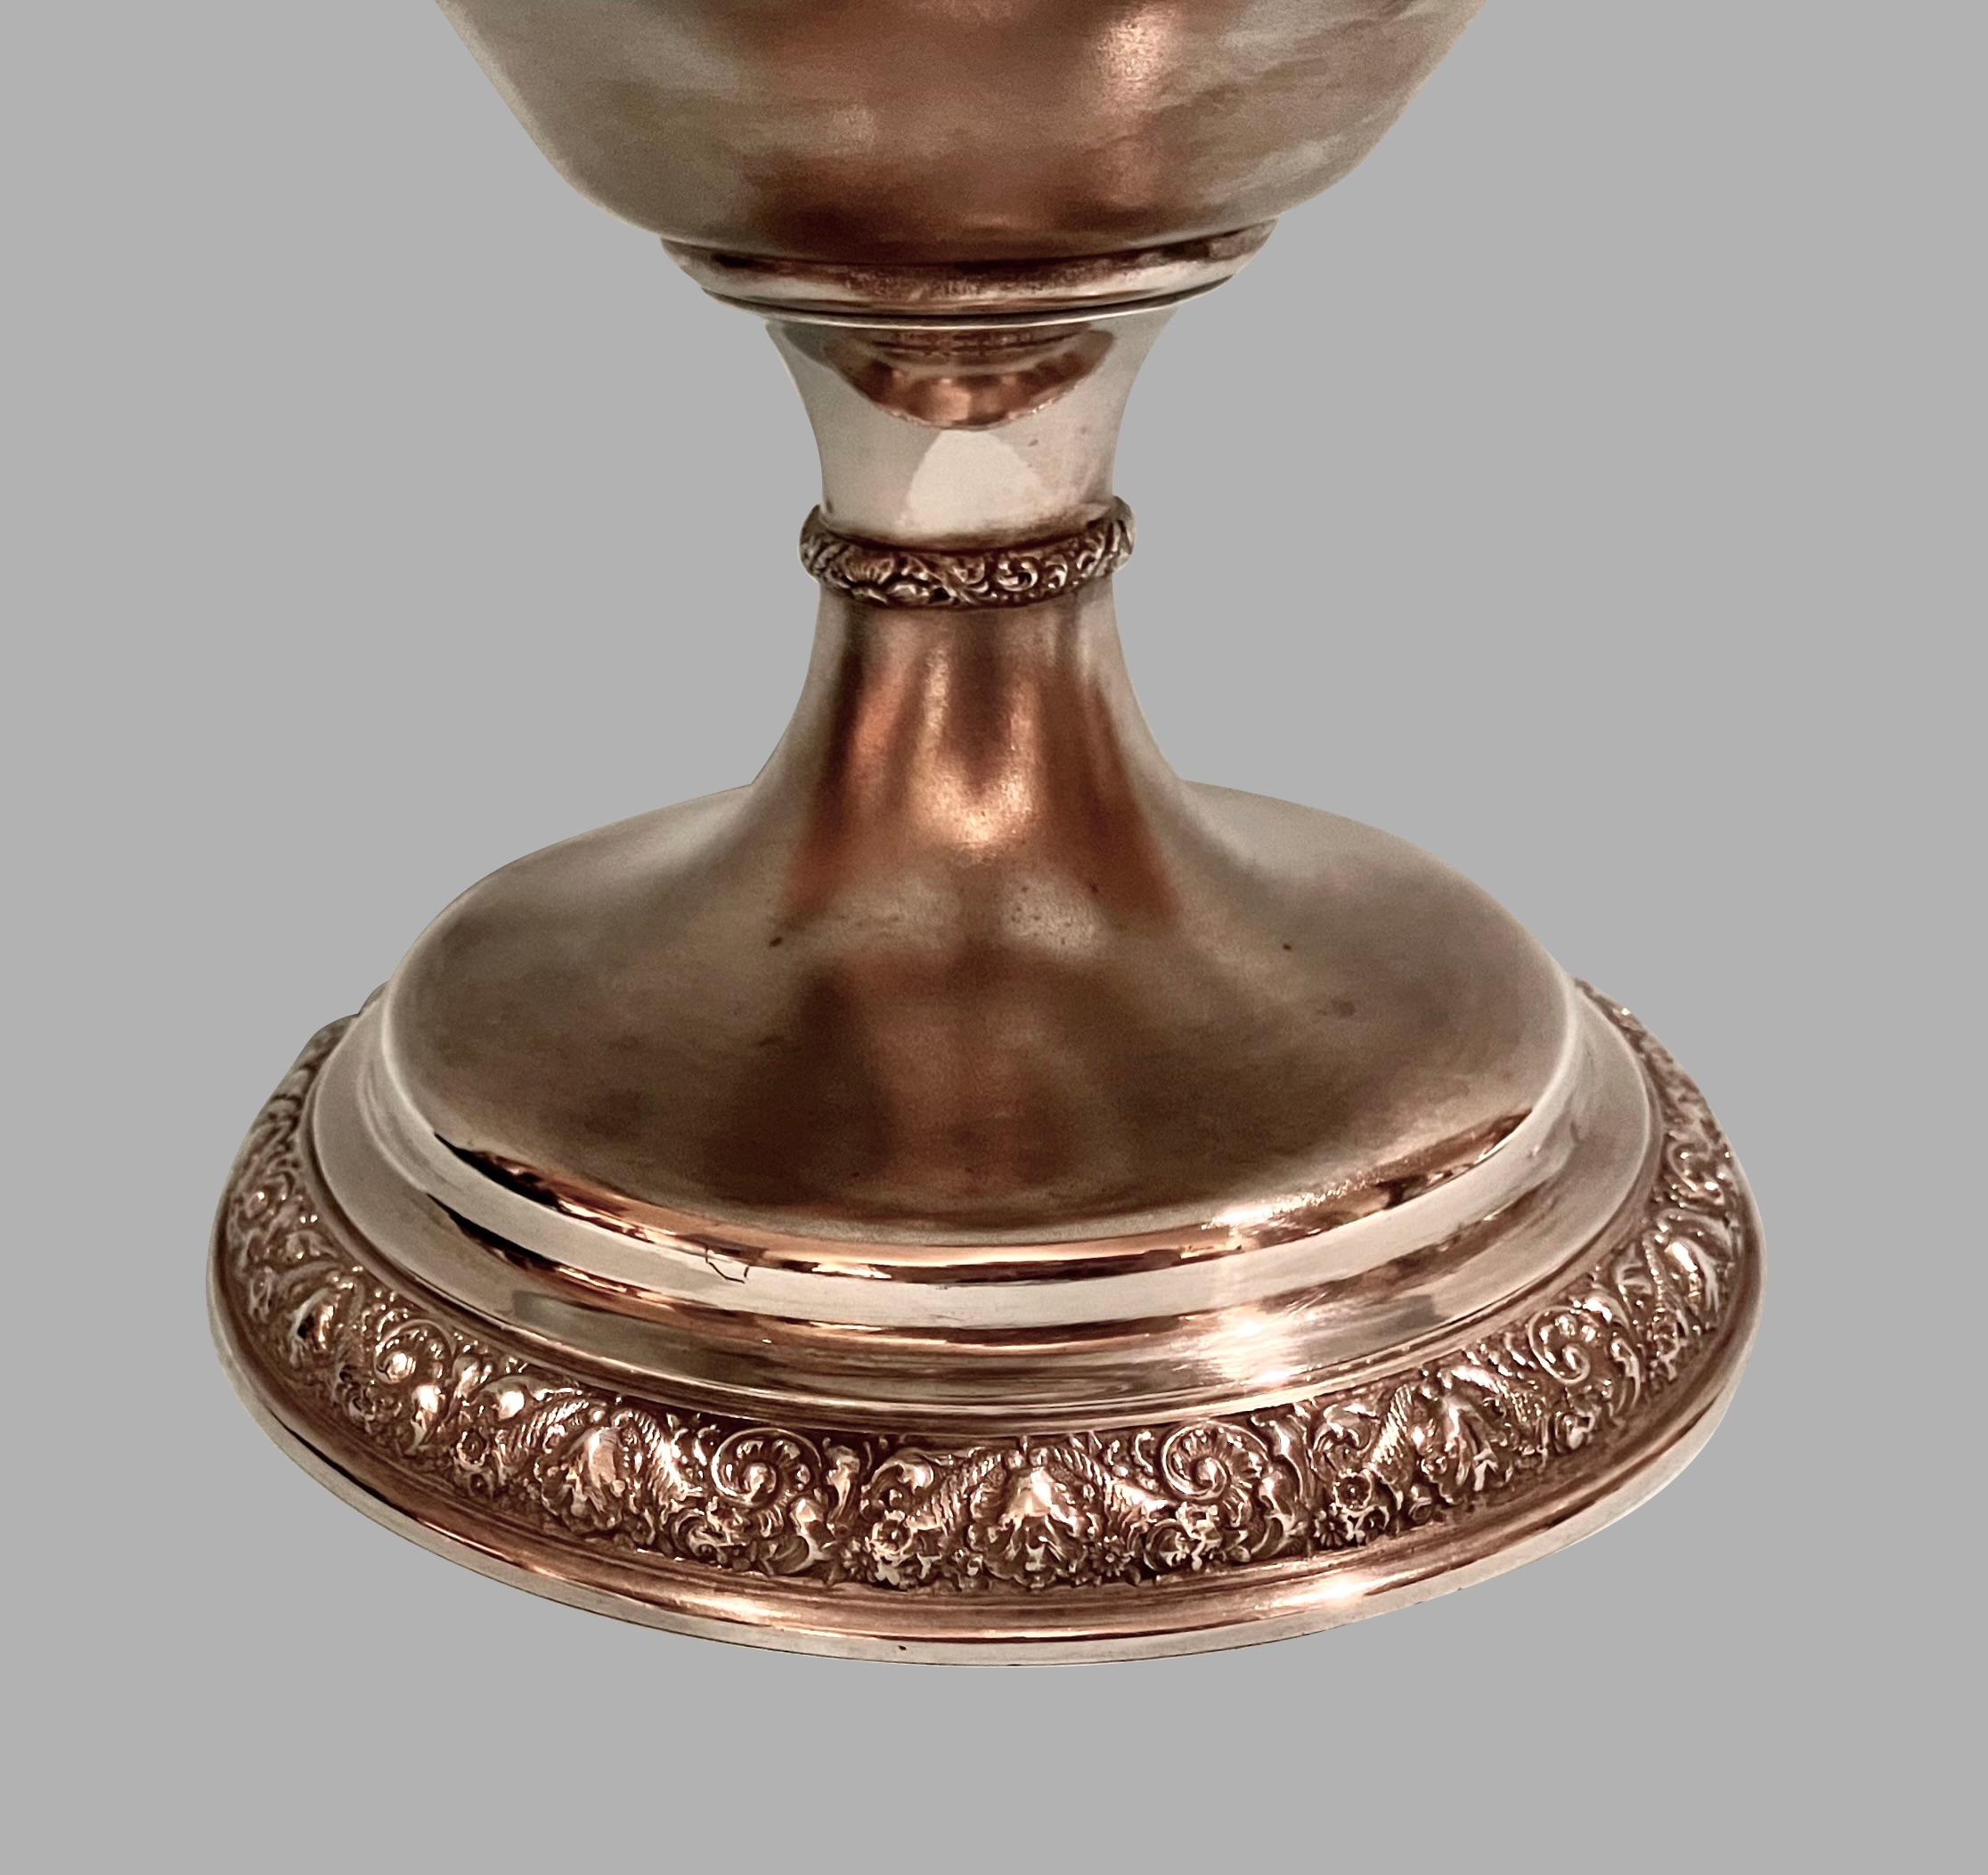 American  Tiffany Gilt-Washed Sterling Silver Center Bowl Circa 1873-1891